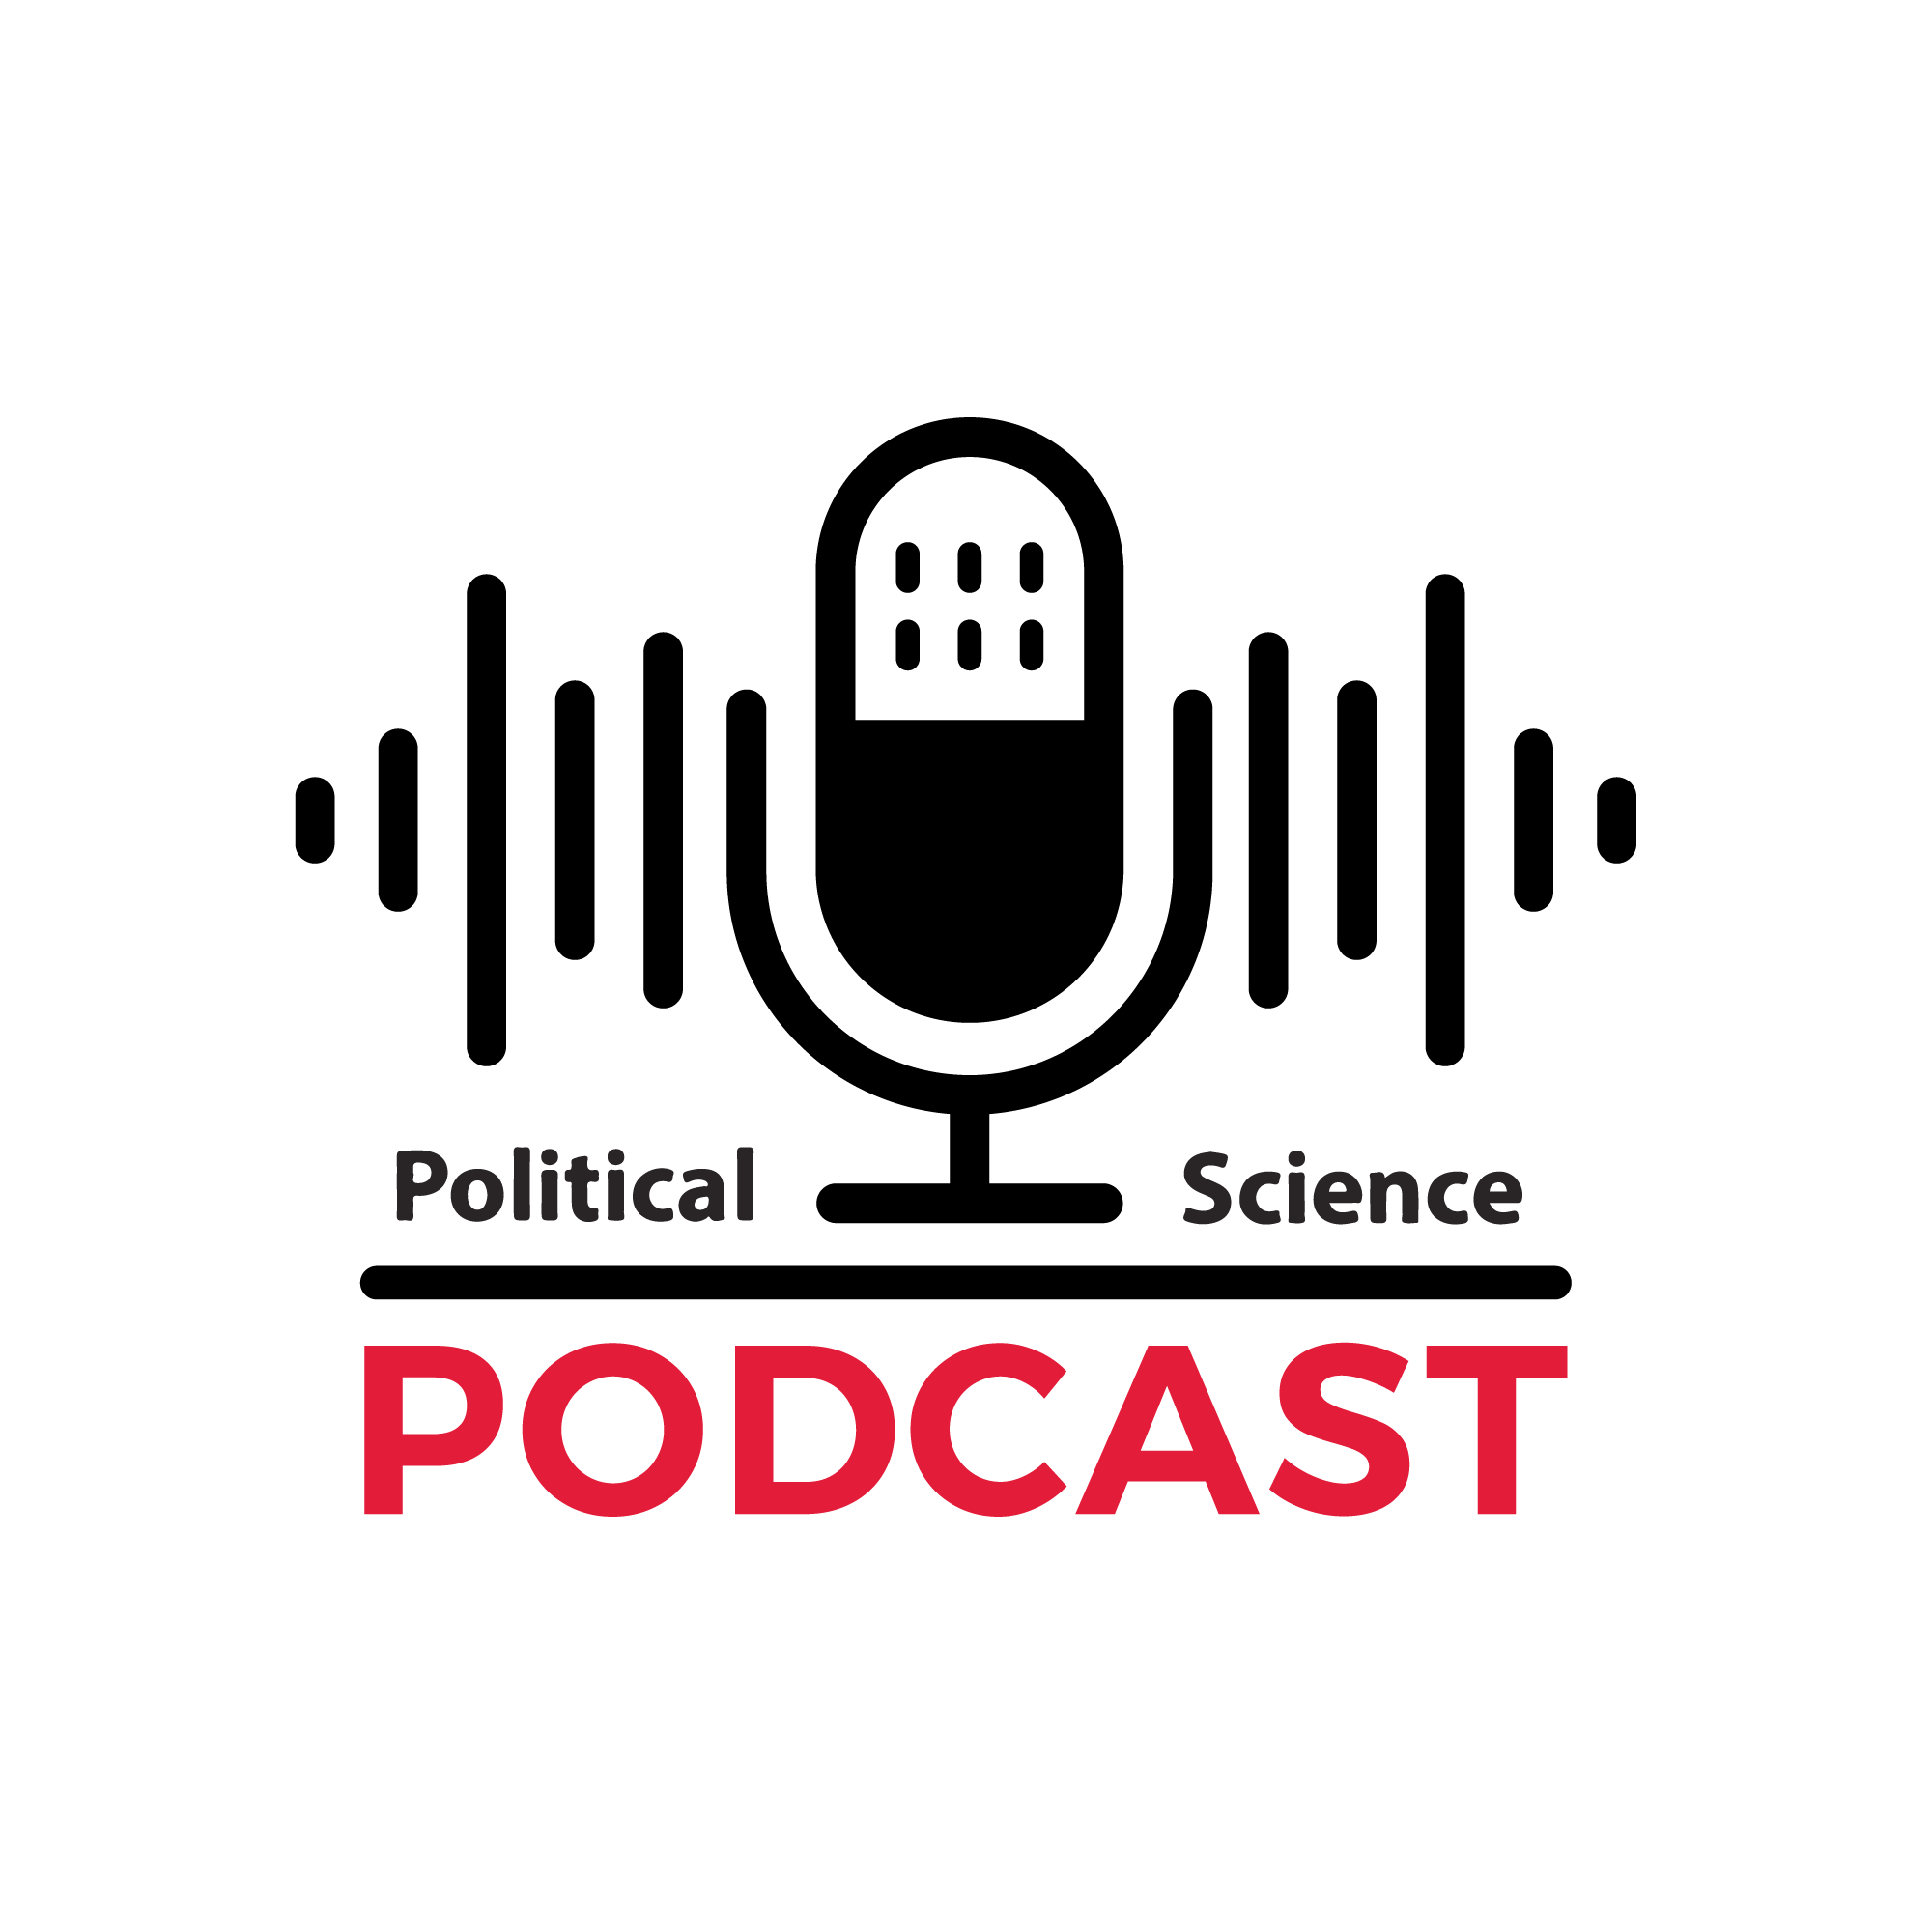 Political Science Podcast logo